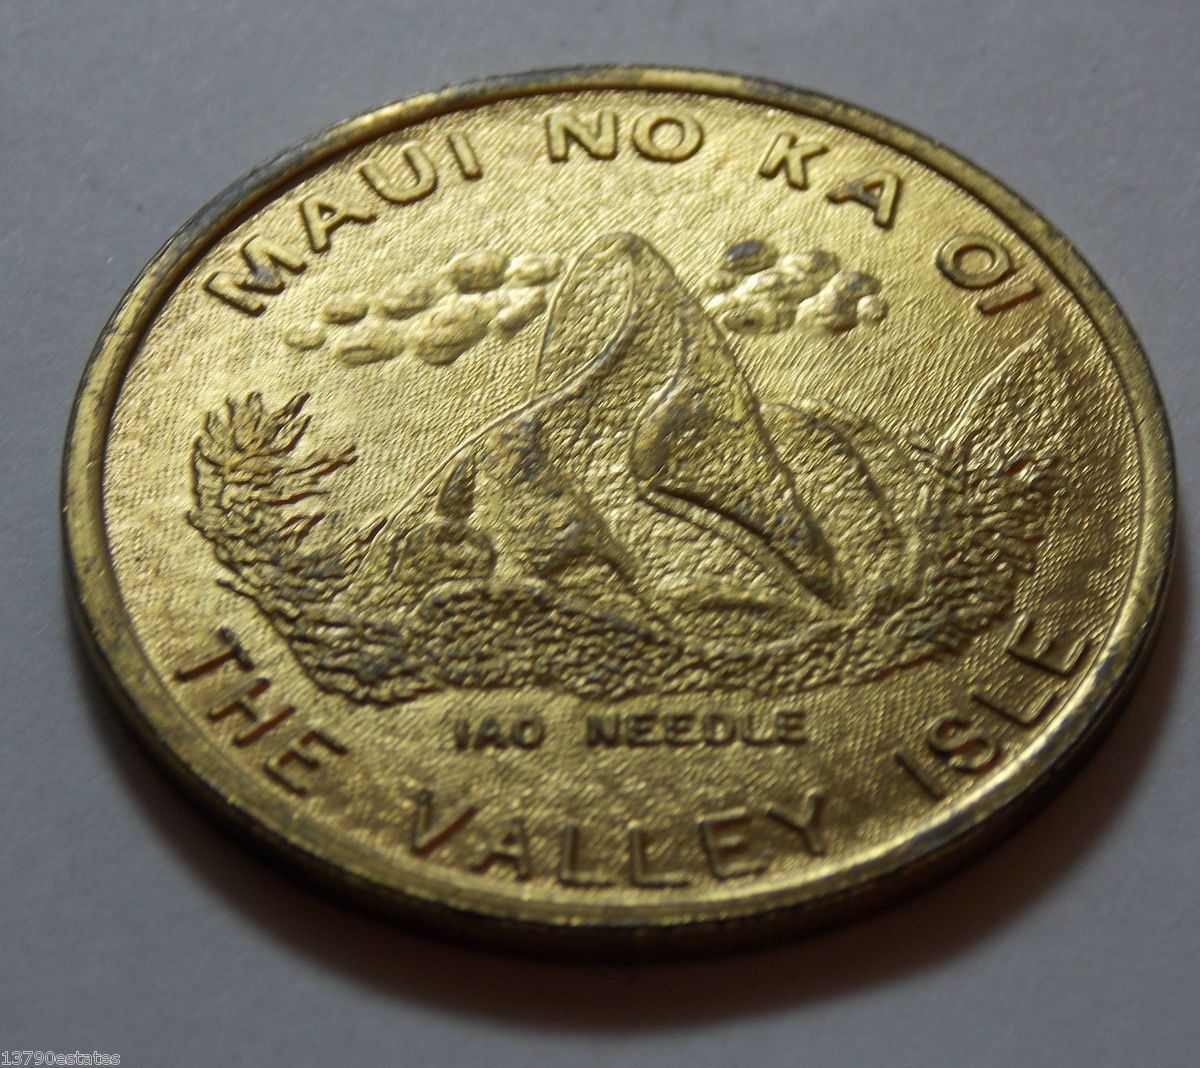 Maui Gilted Bronze Hawaii Trade Dollar Coin Token Iao Needle